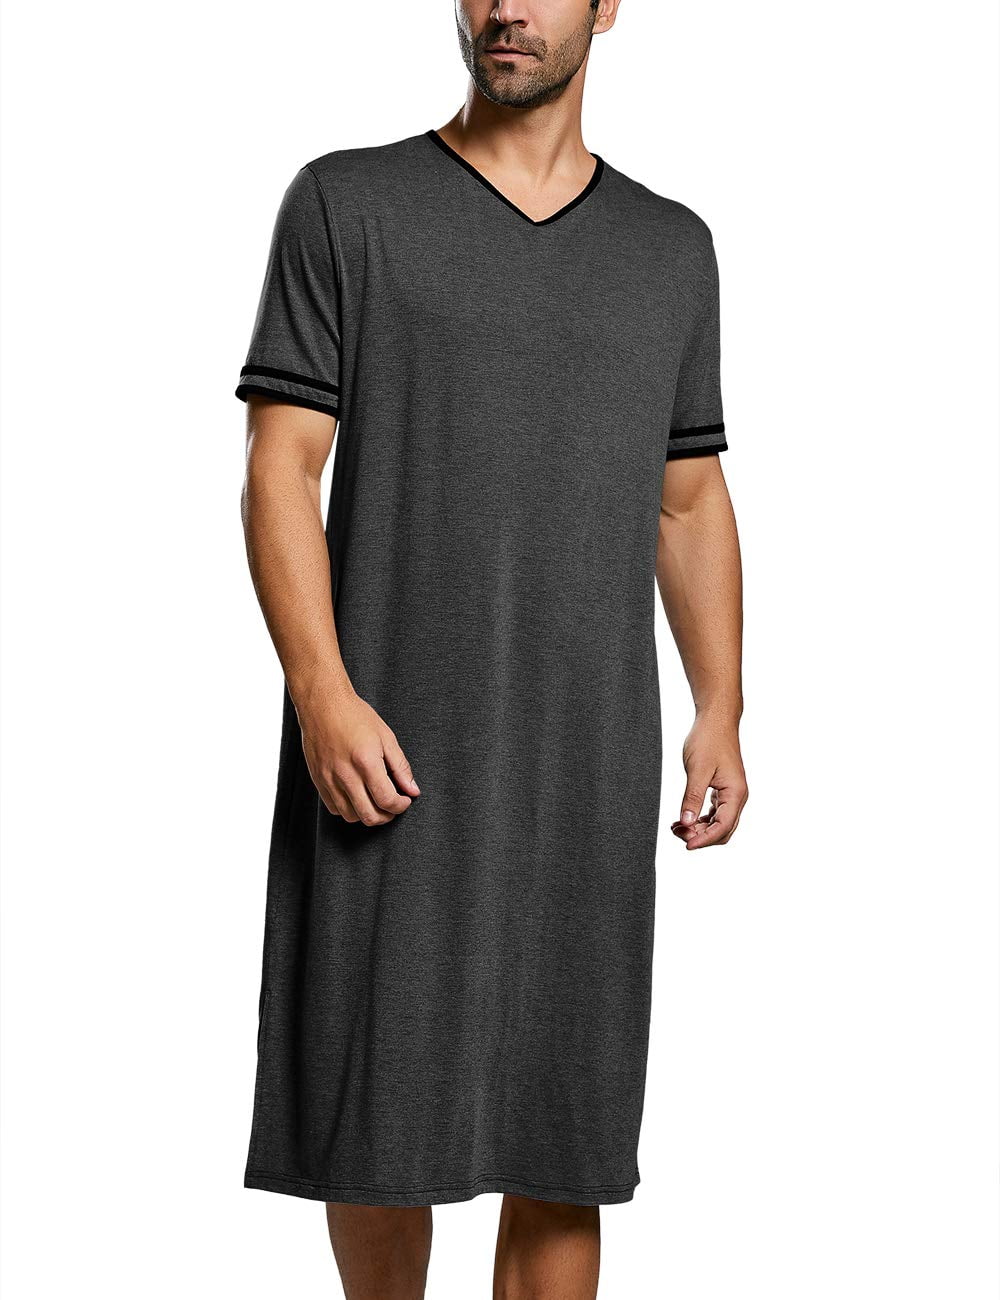 Men Nightshirt Satin Nightwear Comfy V Neck Short Sleeve Loose Pajama Sleepwear